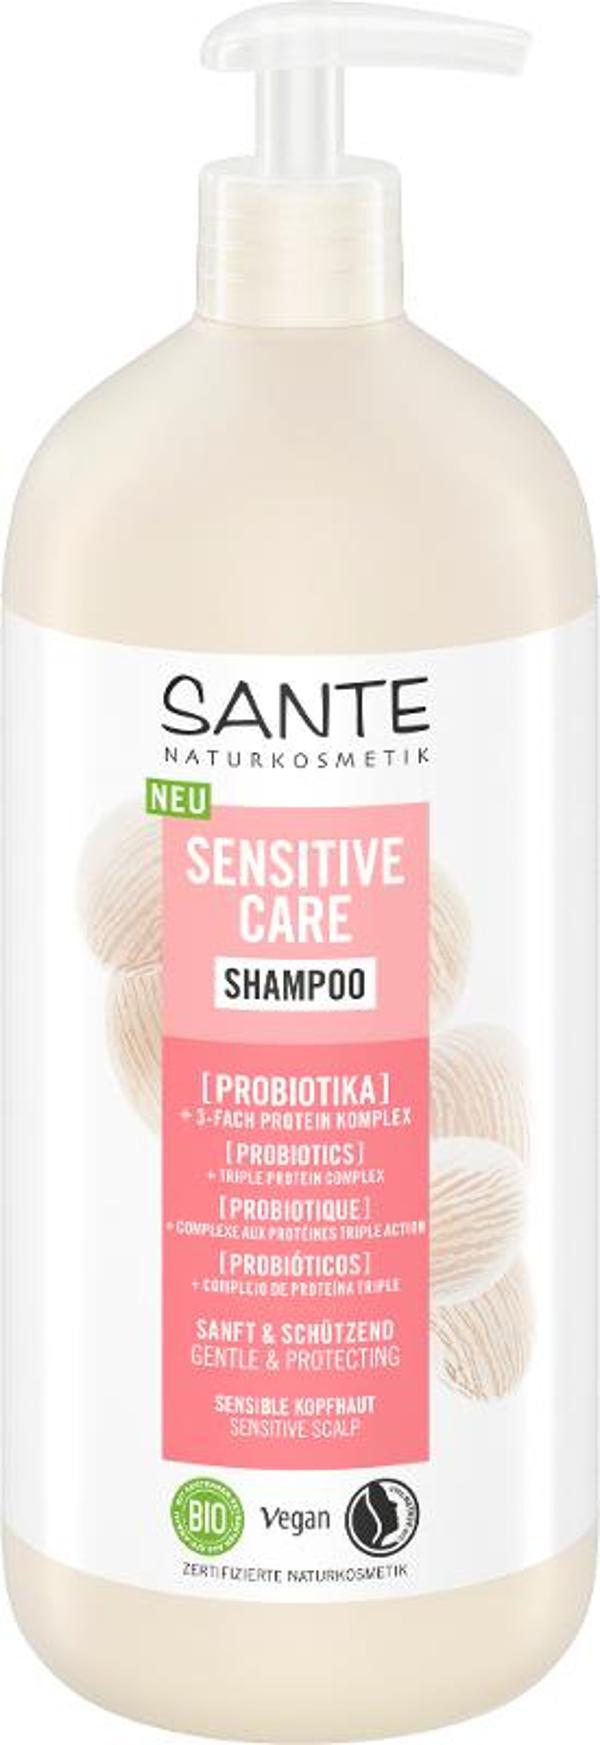 Produktfoto zu Sensitive Care Shampoo Probiotika 950ml